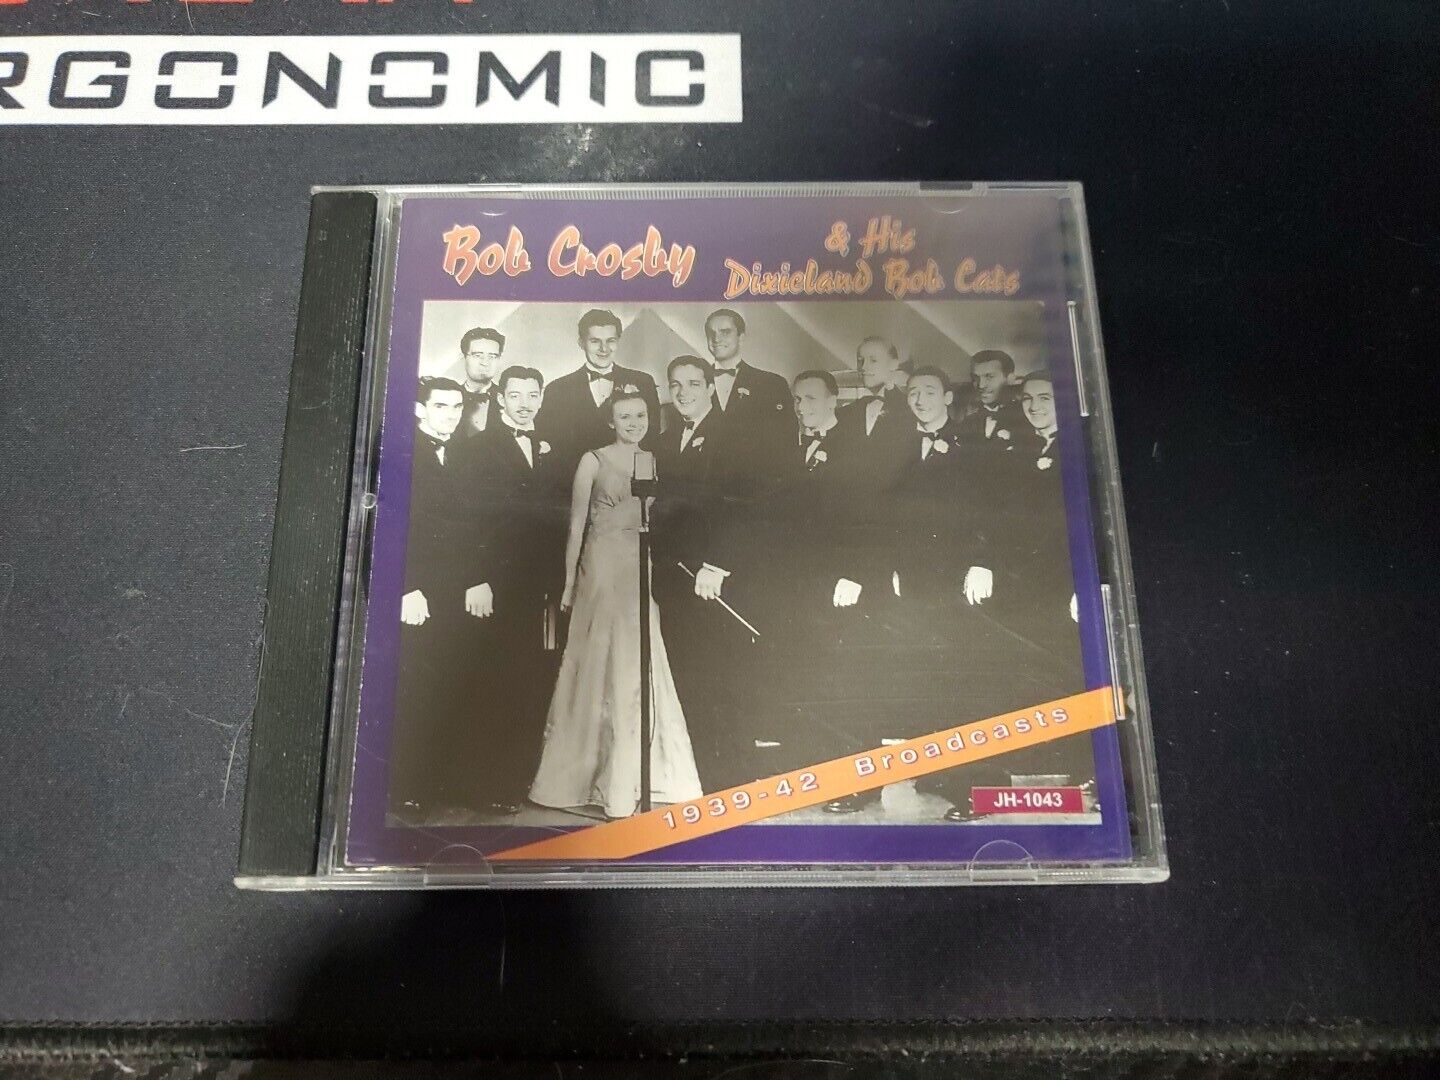 Bob Crosby and His Dixieland Bob Cats by Bob Crosby's Bobcats (CD)